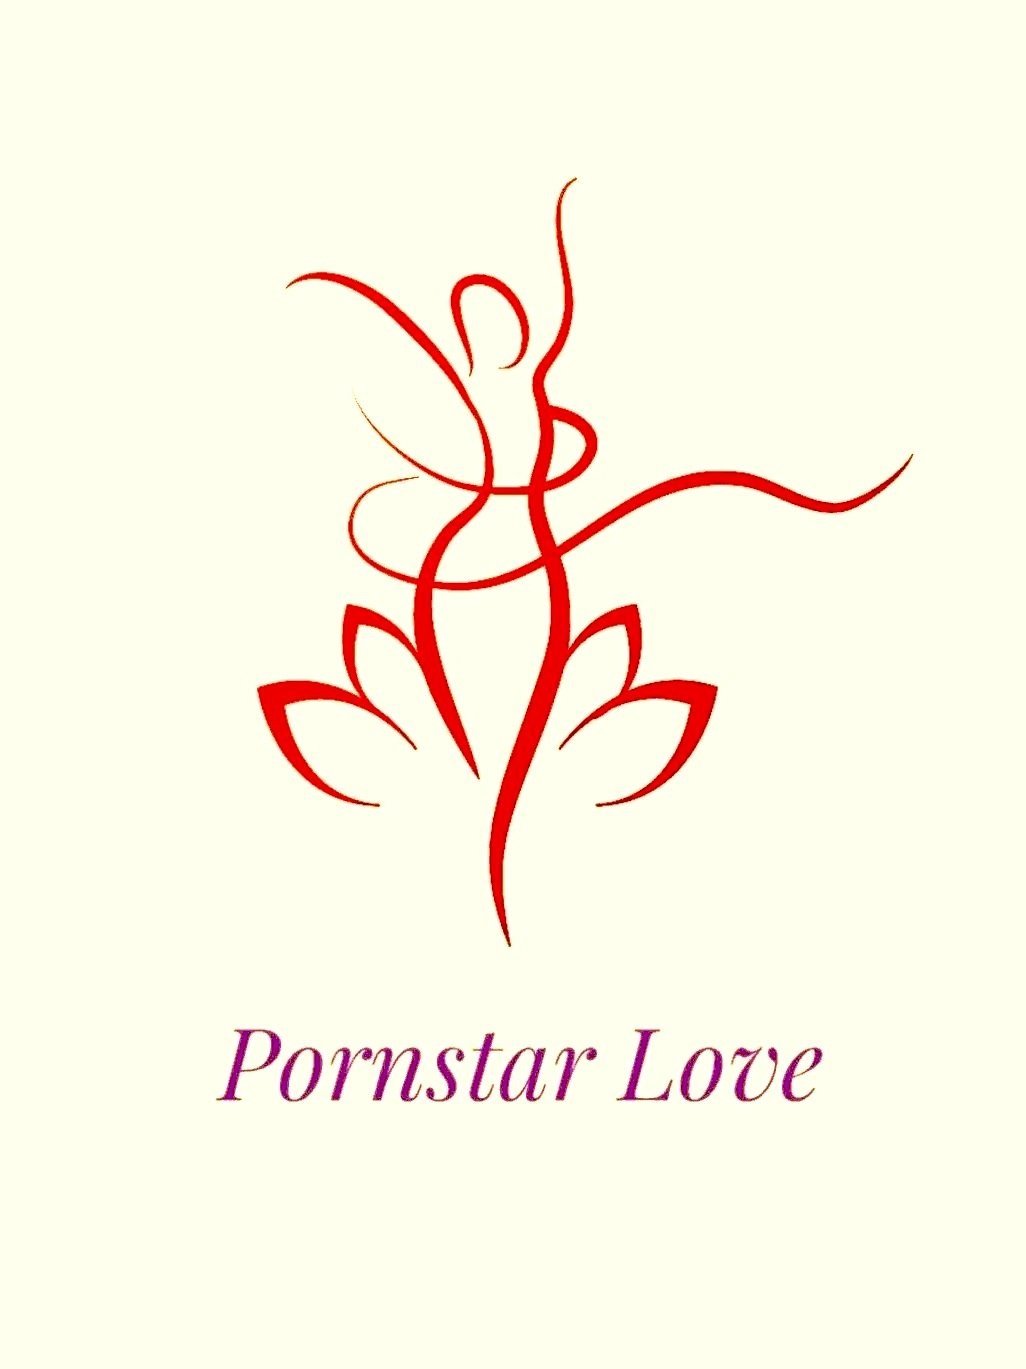 Pornstar Love